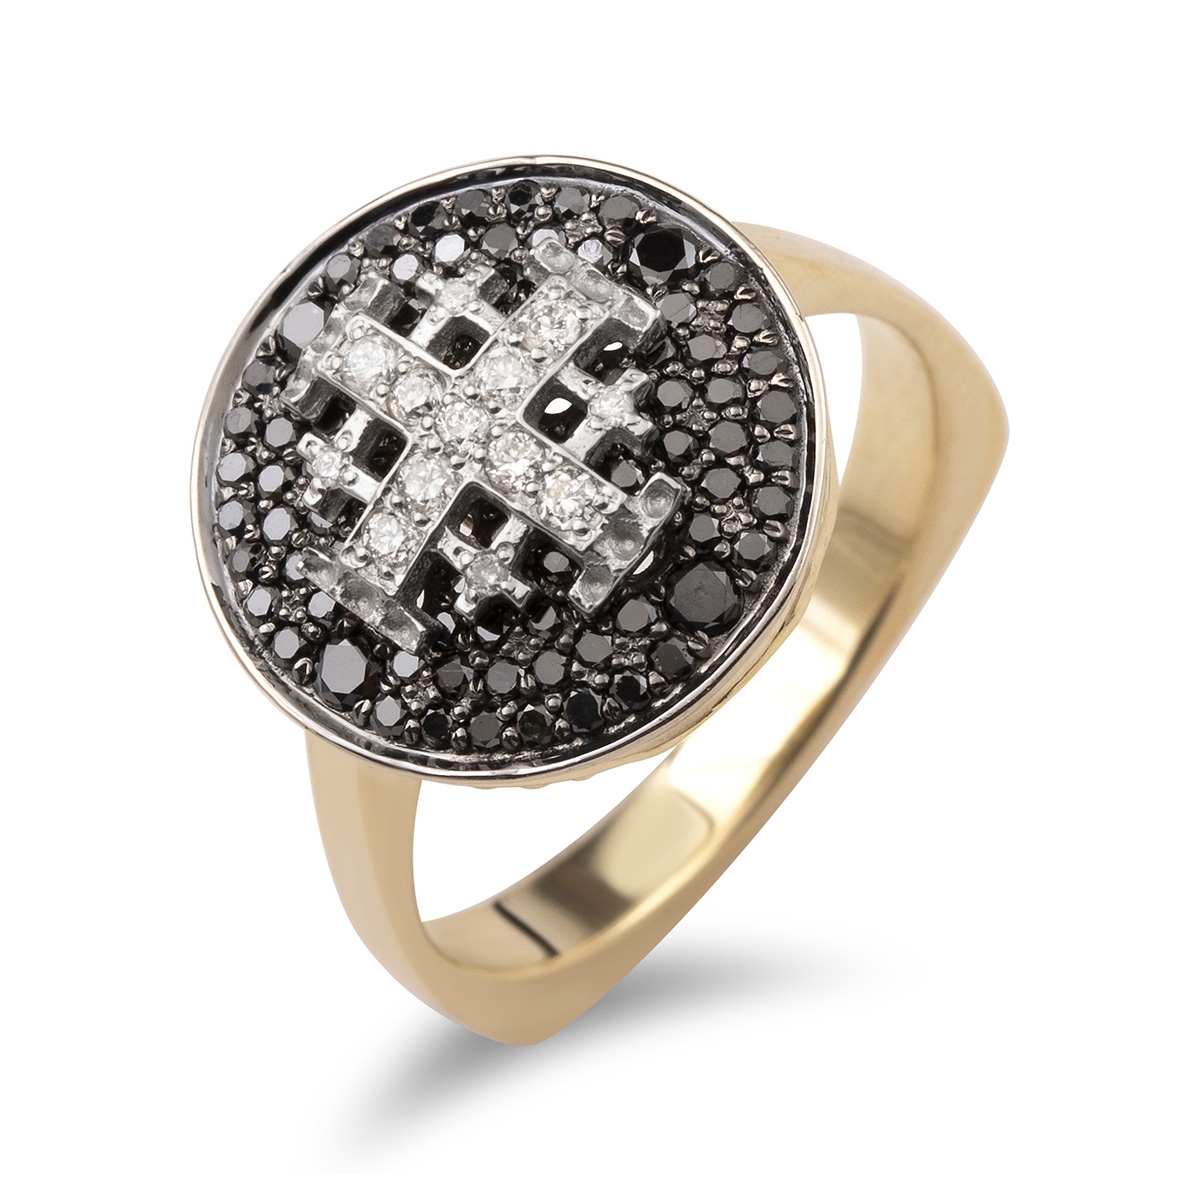 Anbinder Jewelry 14K Gold Jerusalem Cross Ring with White & Black Diamonds - 1